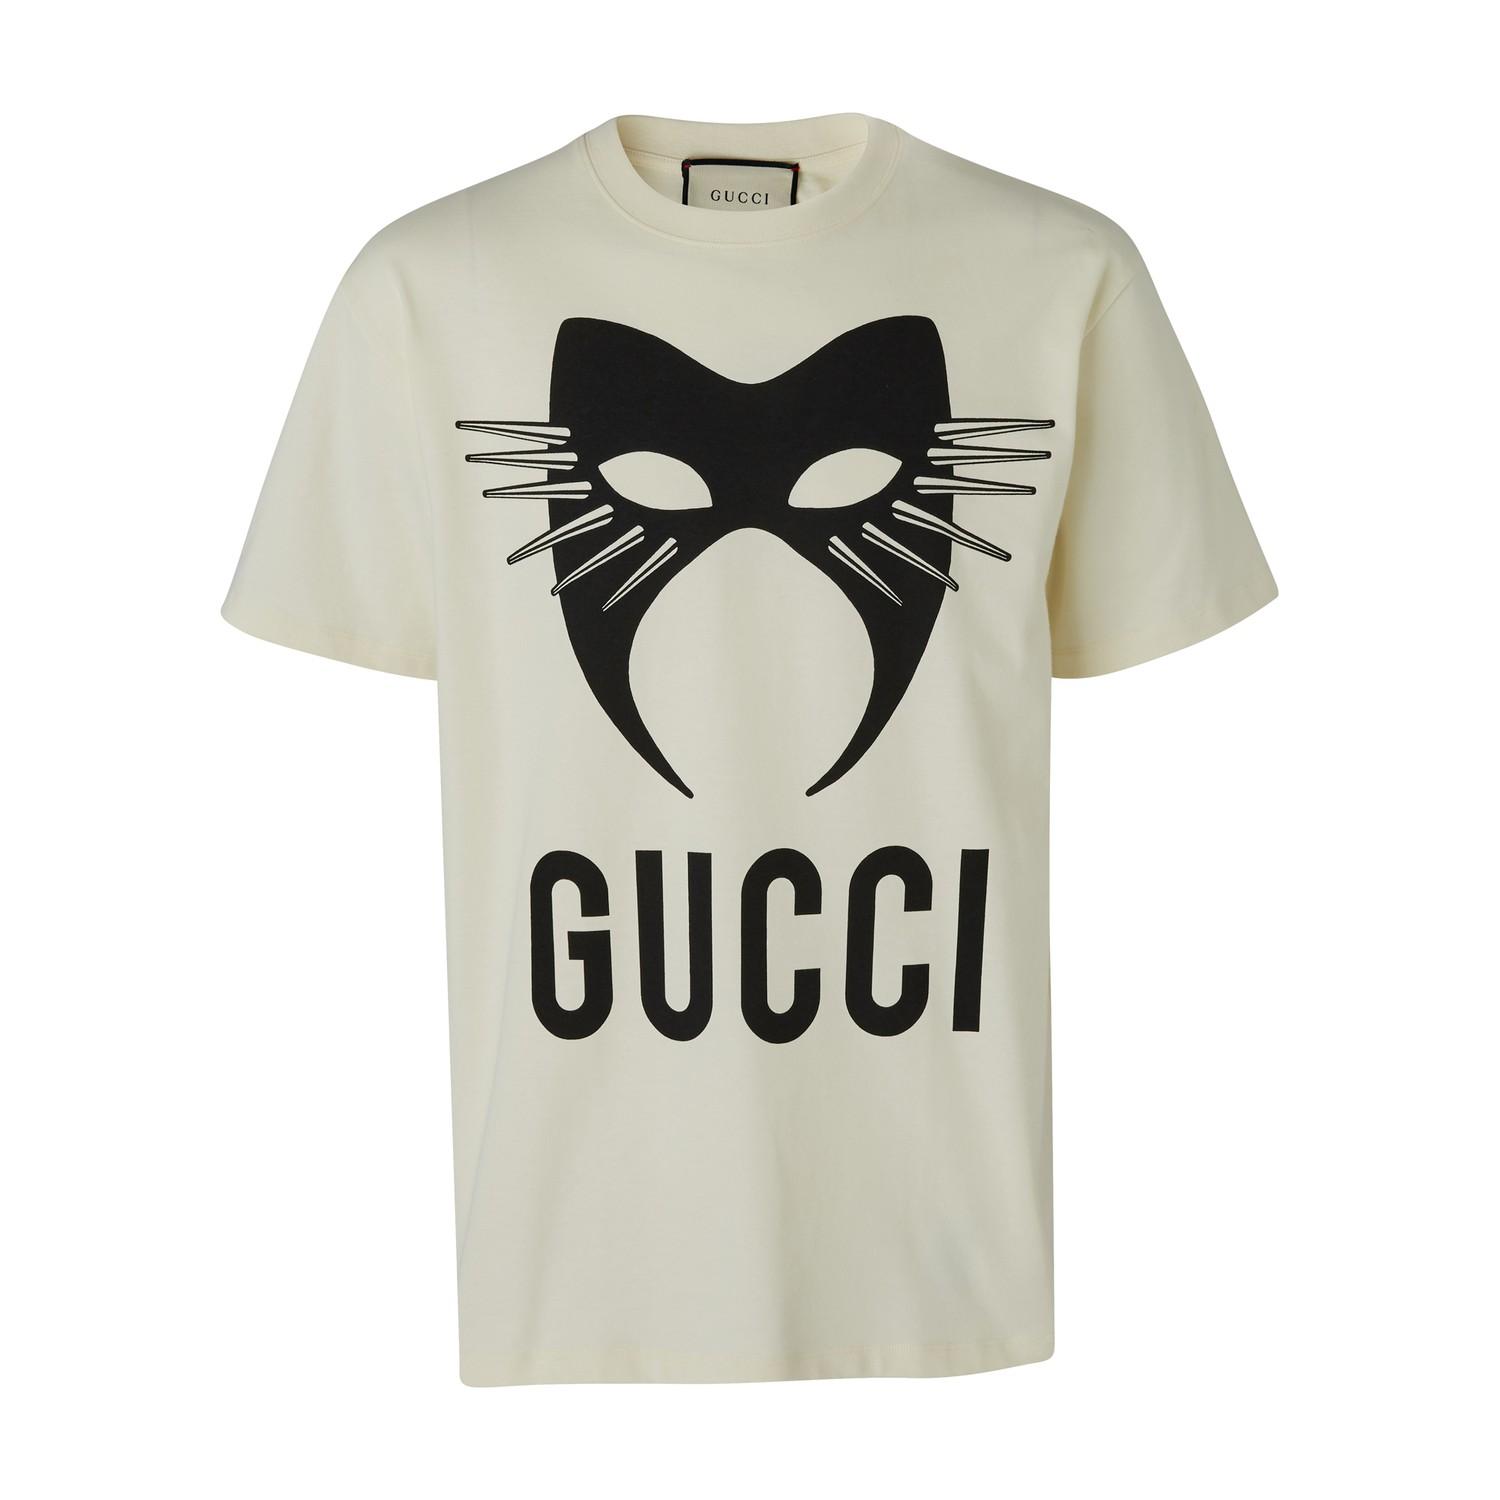 gucci cat t shirt womens